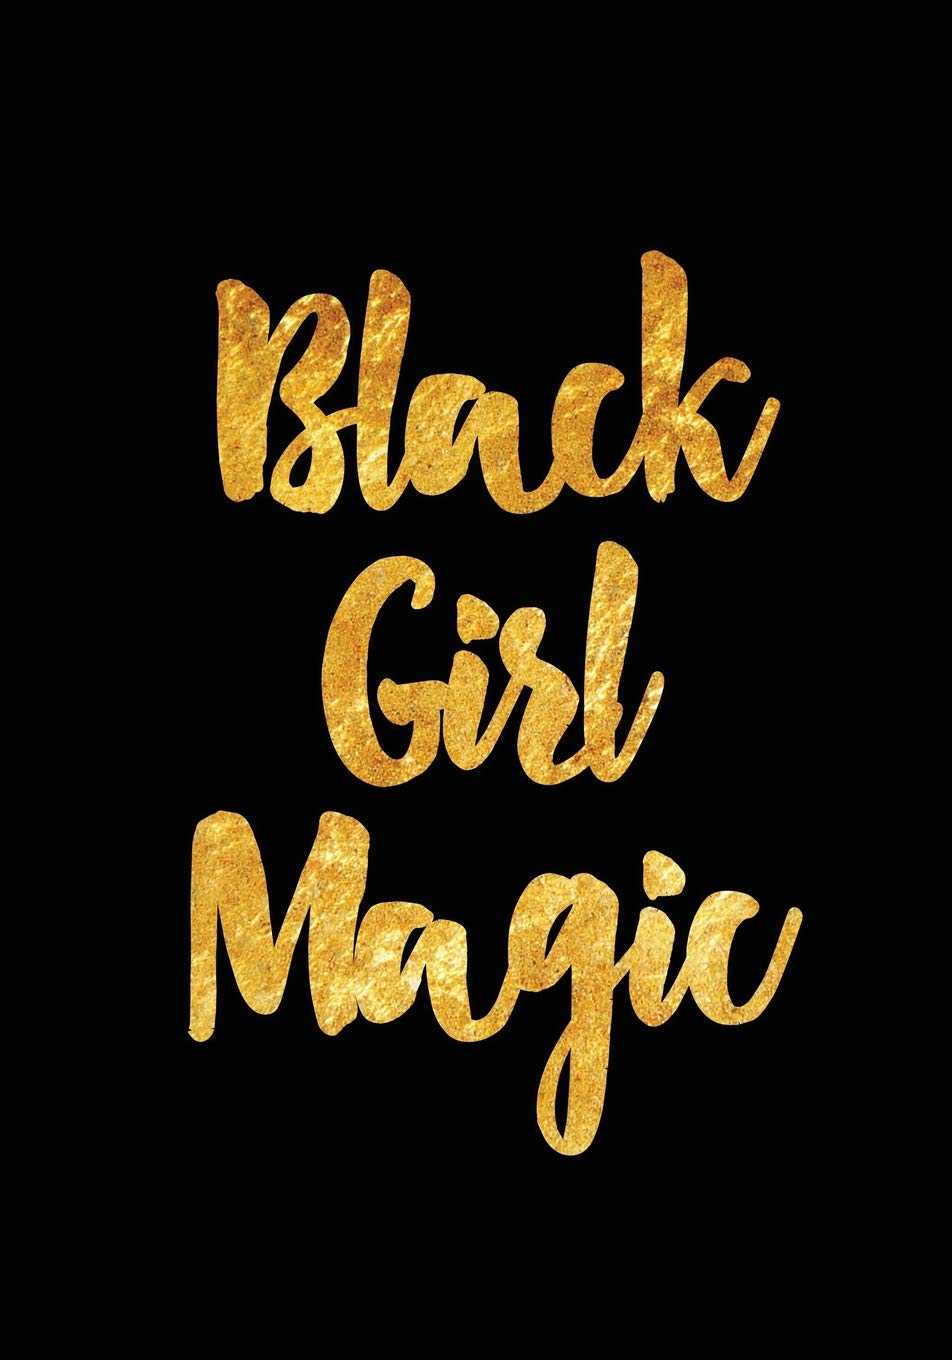 Girl magic wallpaper black Black Girl